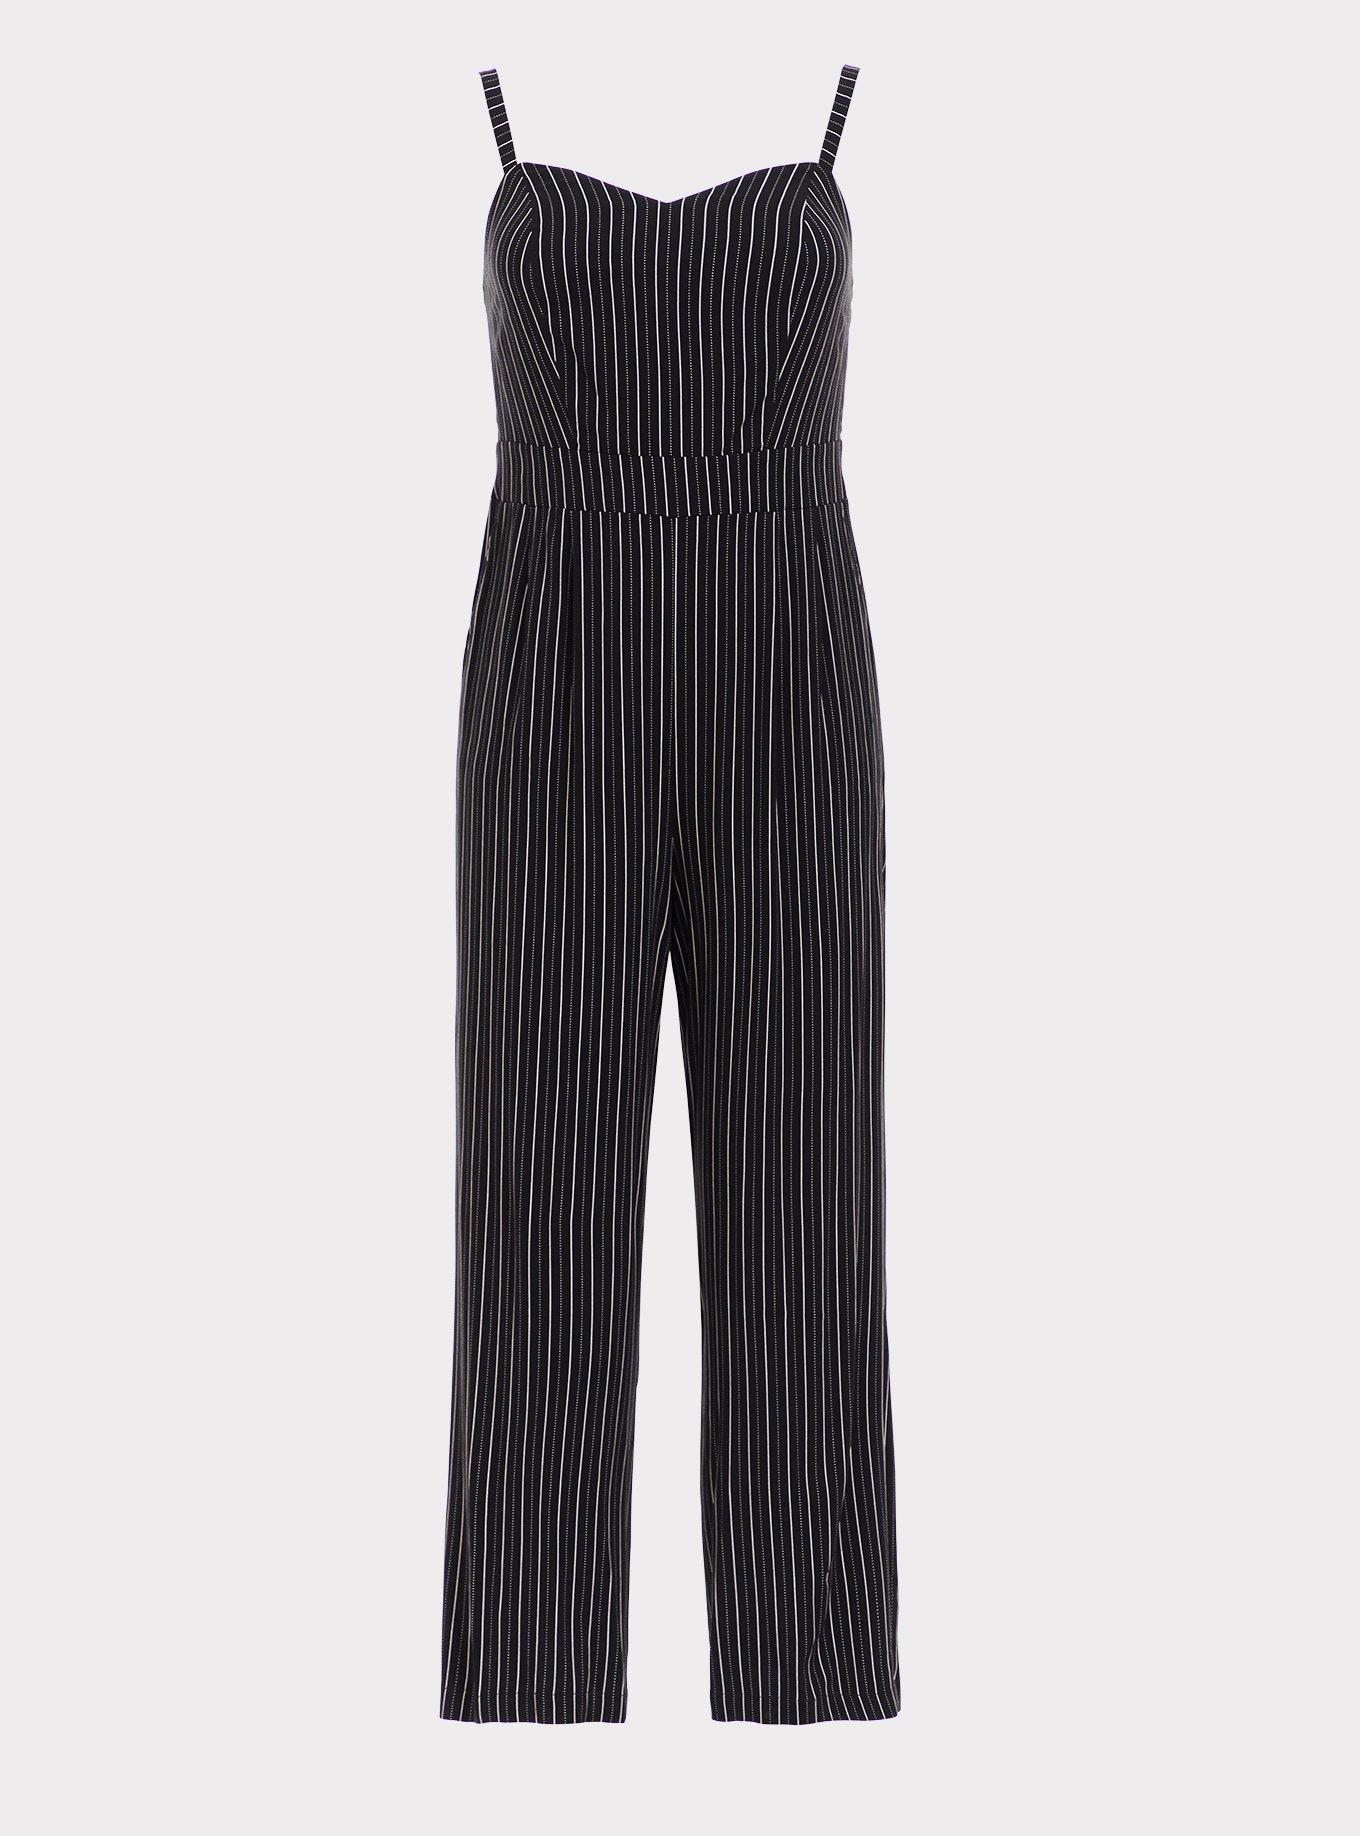 Plus Size - Black and White Stripe Wide Leg Challis Jumpsuit - Torrid